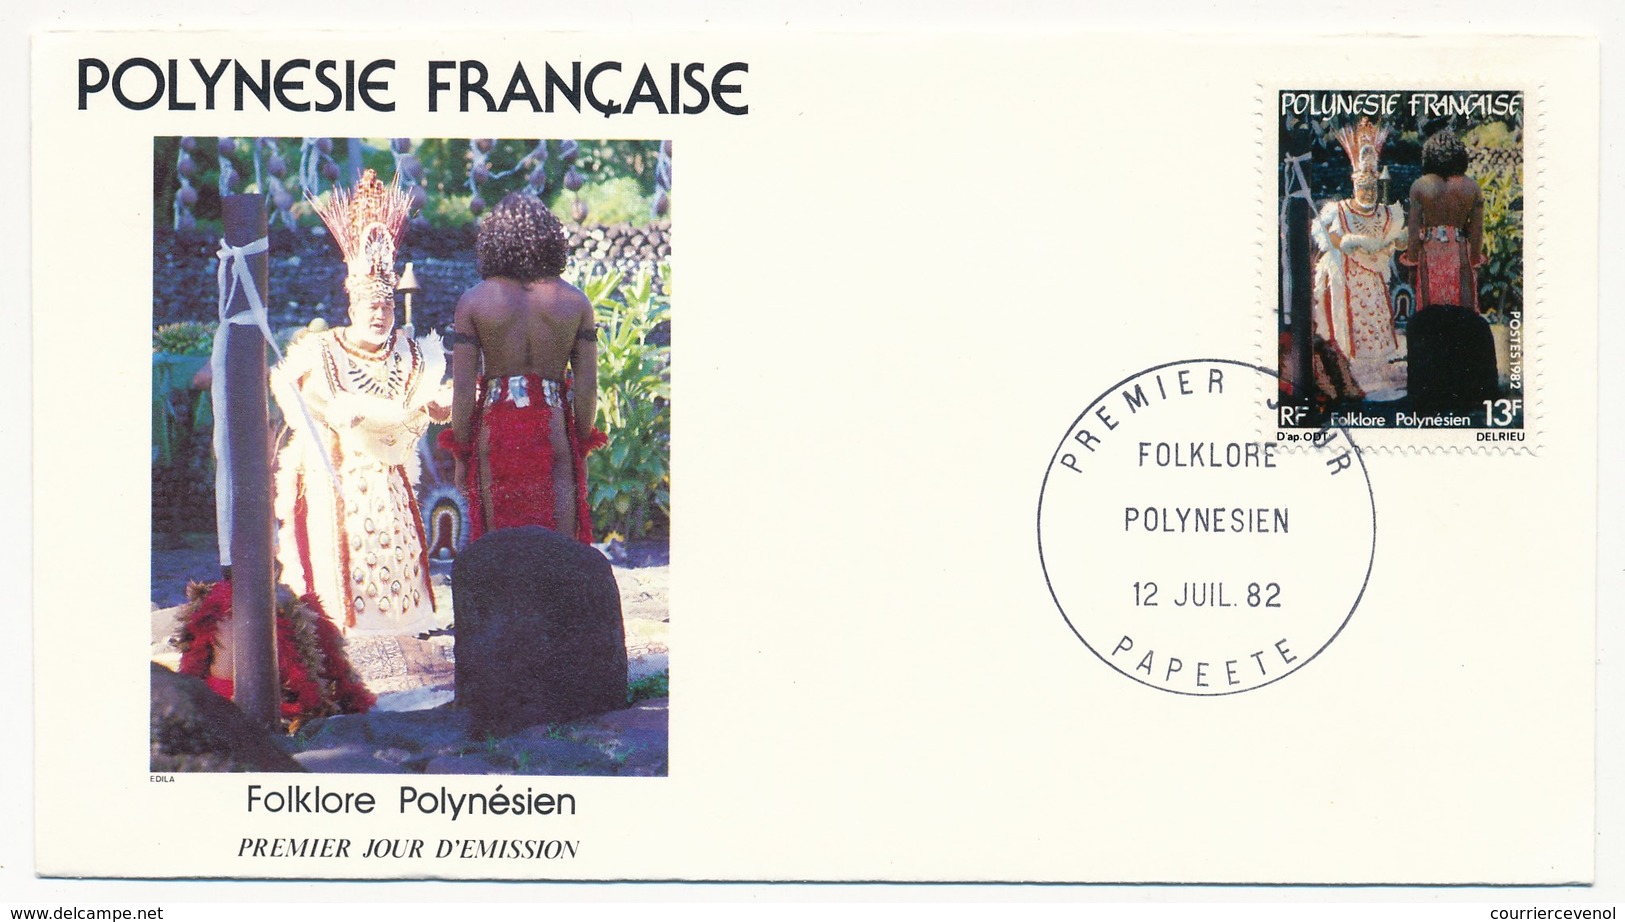 POLYNESIE FRANCAISE - 3 FDC - Folklore Polynésien - 2 Juillet 1982 - Papeete - FDC